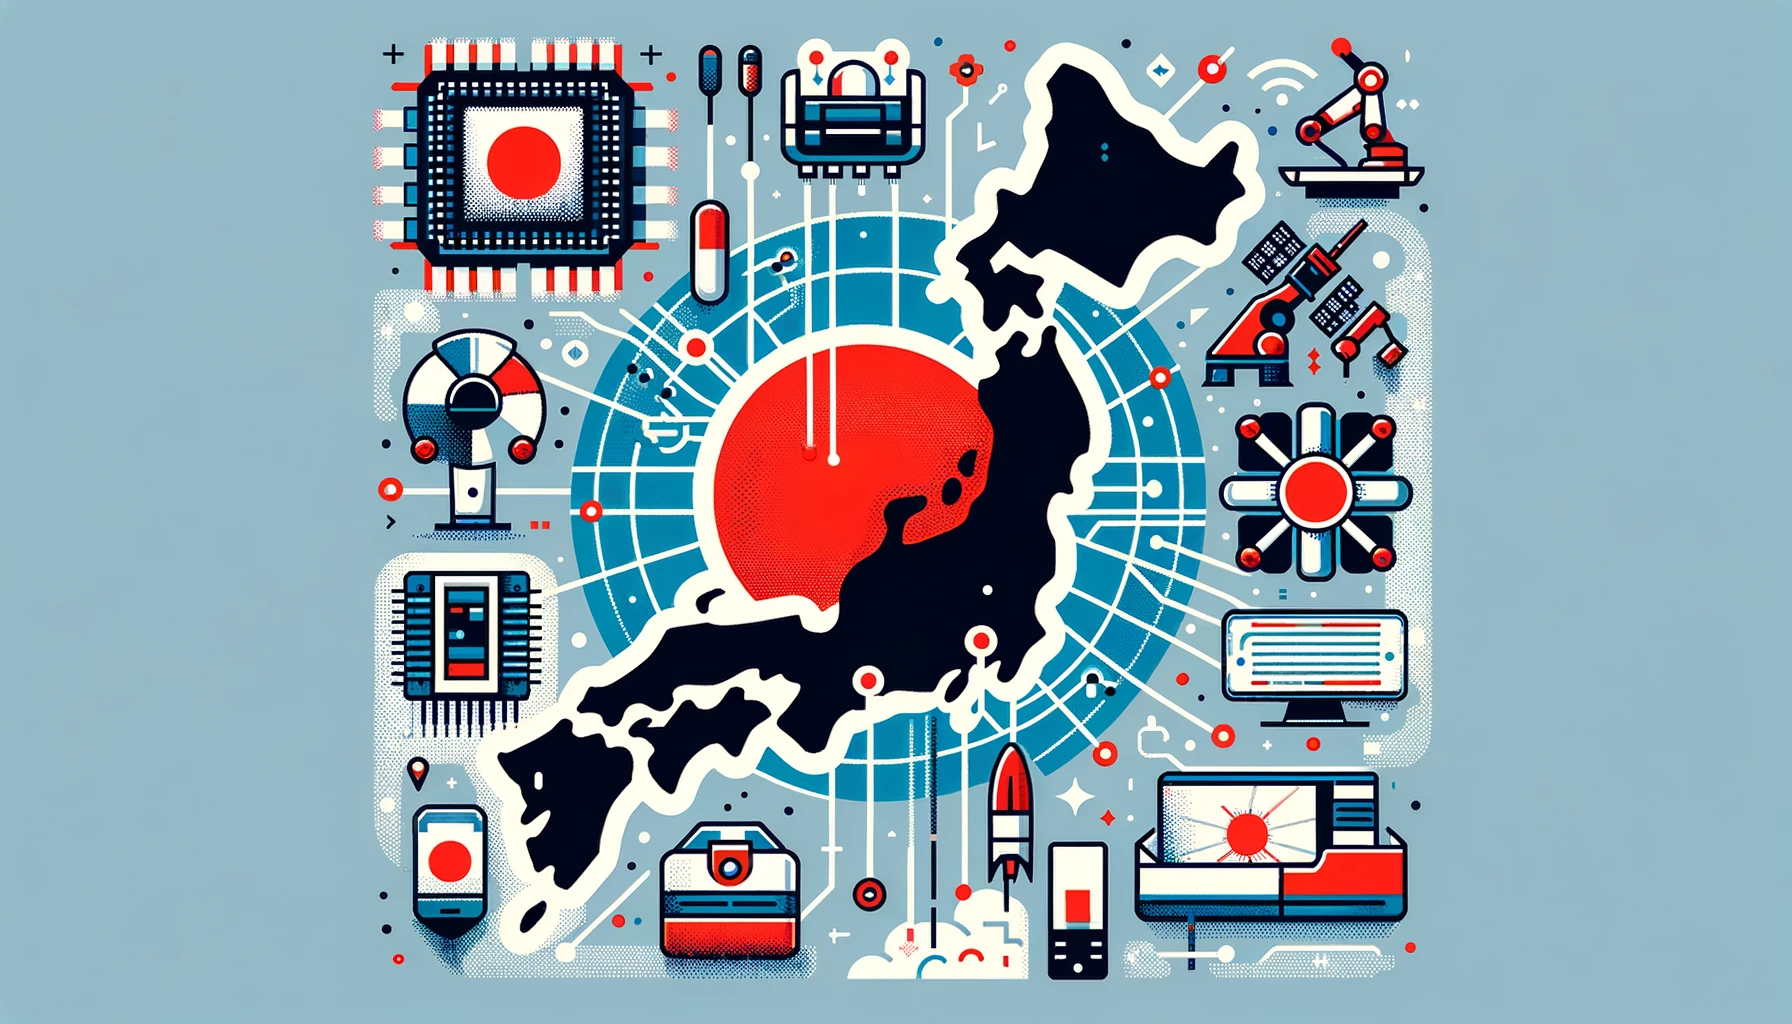 Japan aims to regain its technological advantage through international collaboration.